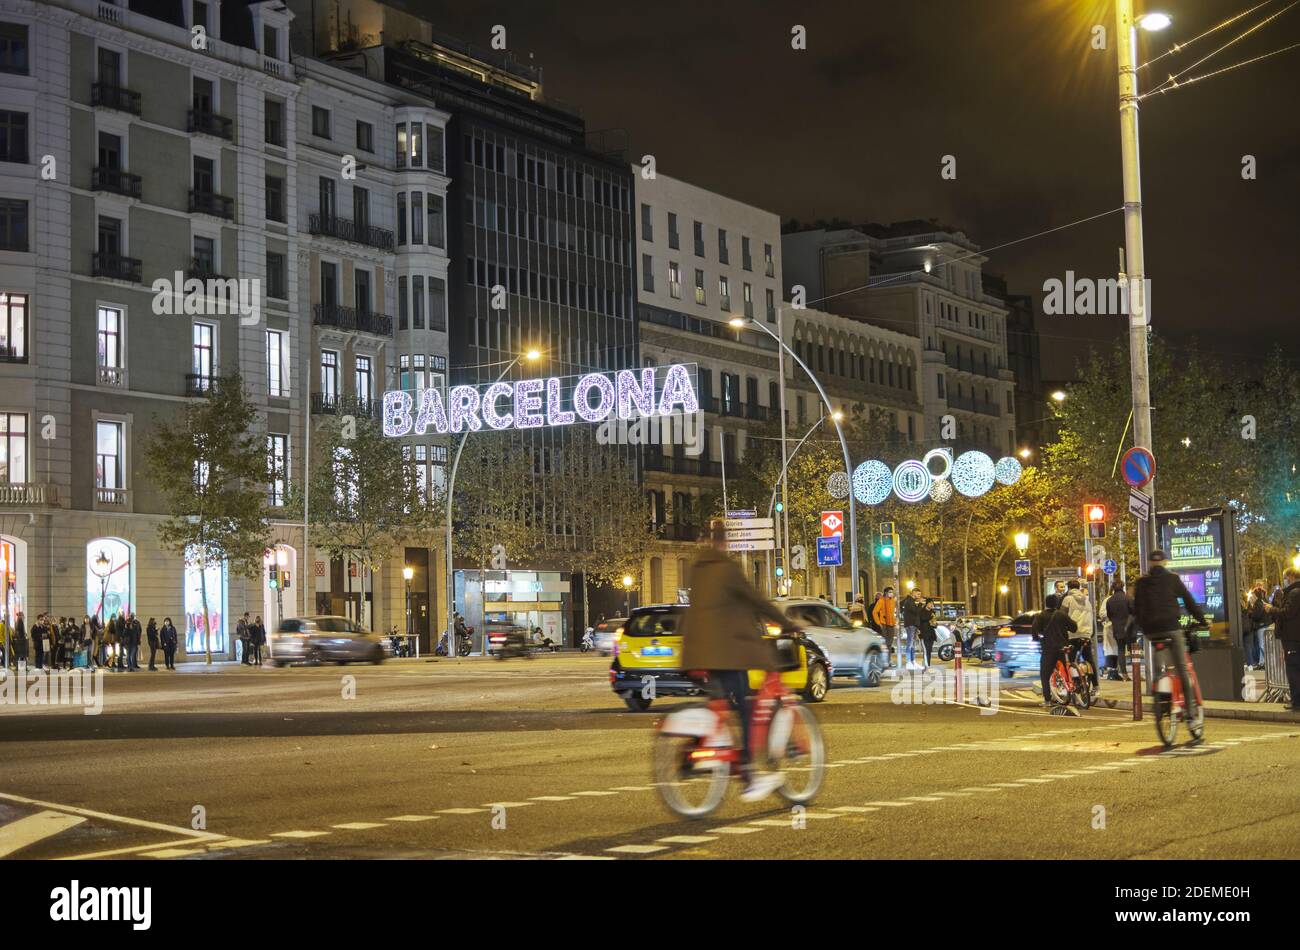 BARCELONA, CATALONIA, SPAIN - NOVEMBER 28, 2020: Gran Via de Les Corts Catalana with big sign of Barcelona, Christmas lights decoration at night Stock Photo